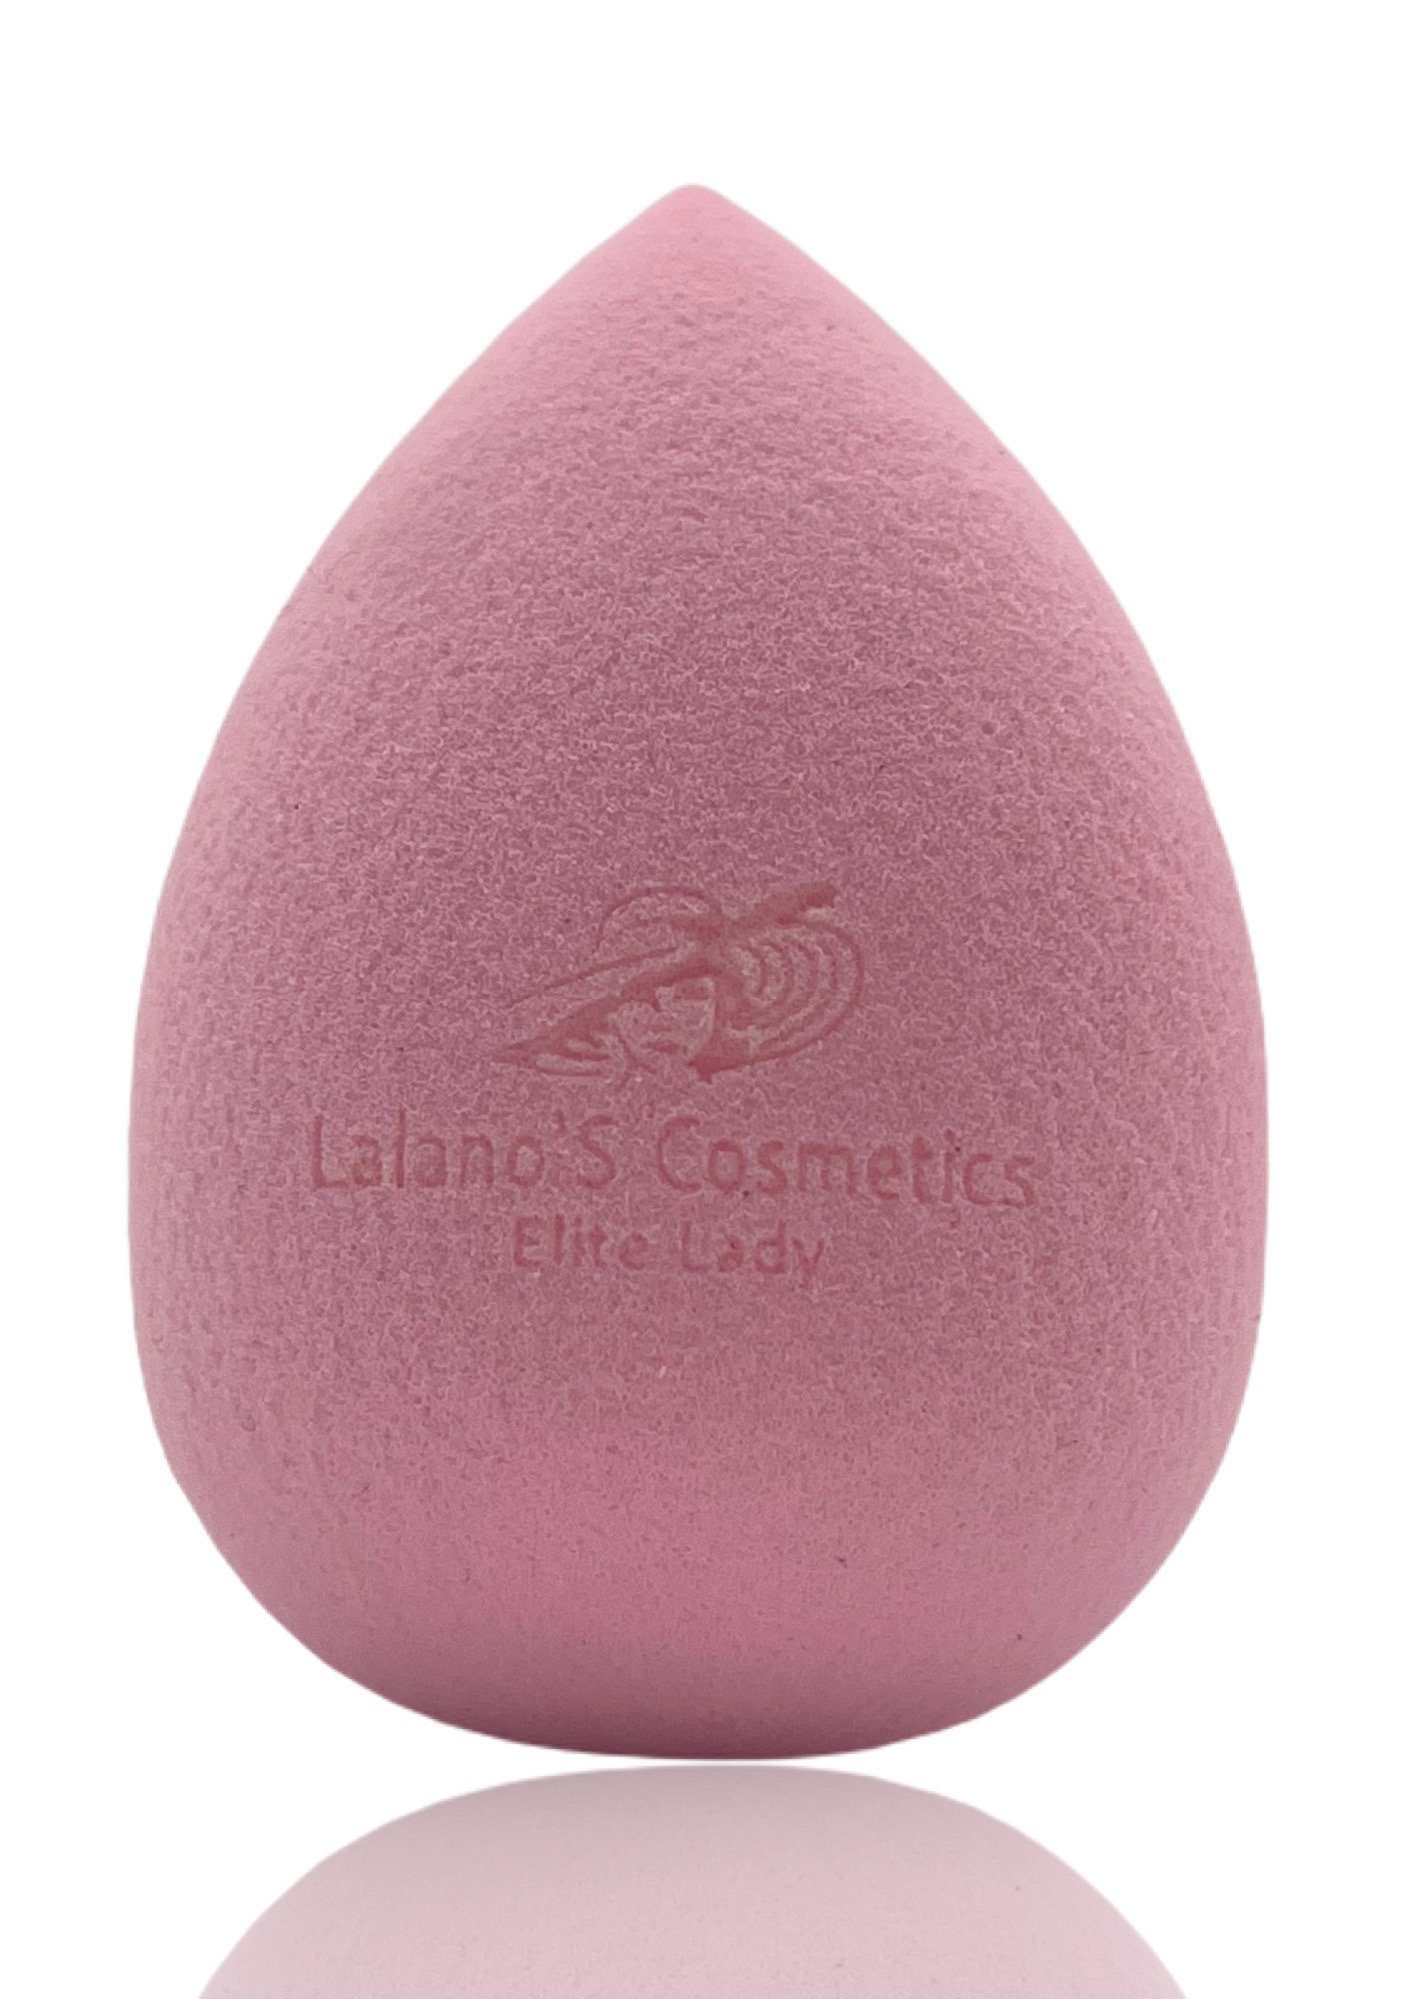 Lalano`S Cosmetics Pink, BEAUTY Maniküre tlg. Schwamm Make-up 2 Pediküre Set, BLENDER